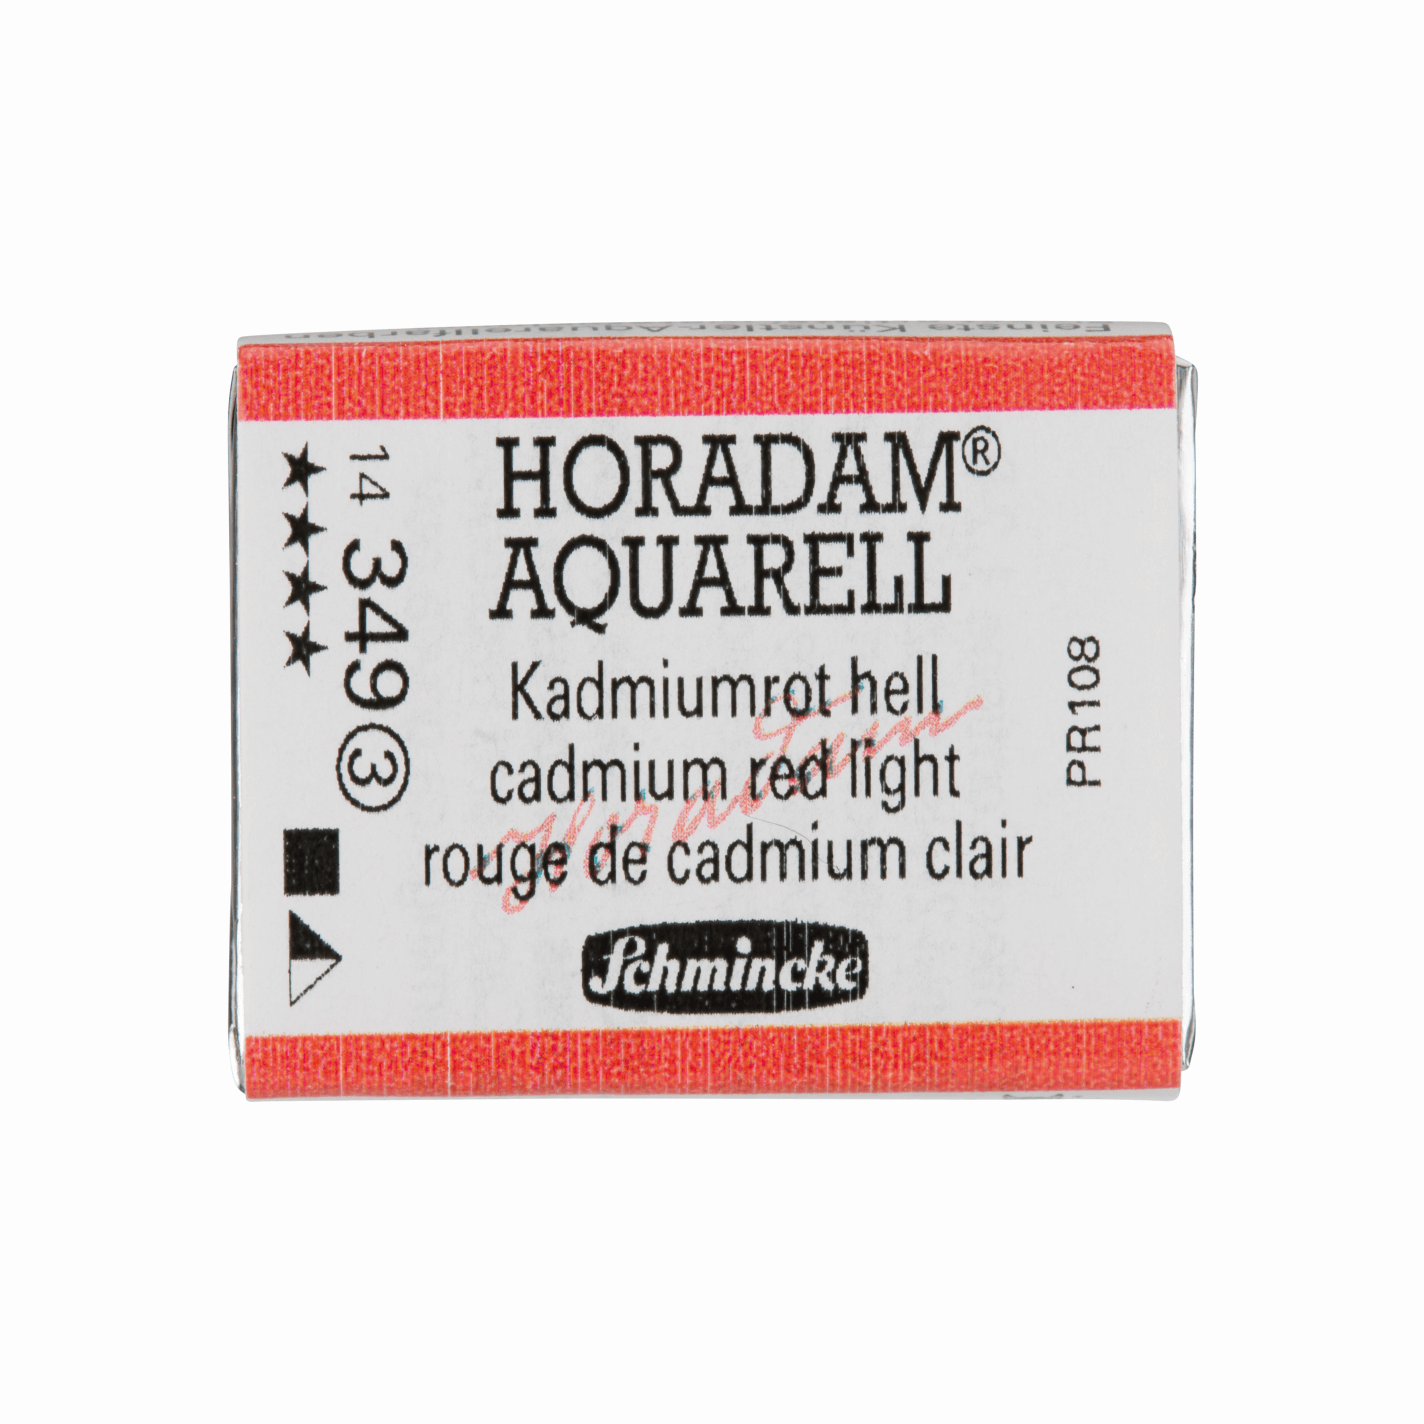 Schmincke Horadam Aquarell pans 1/1 pan Cadmium Red Light